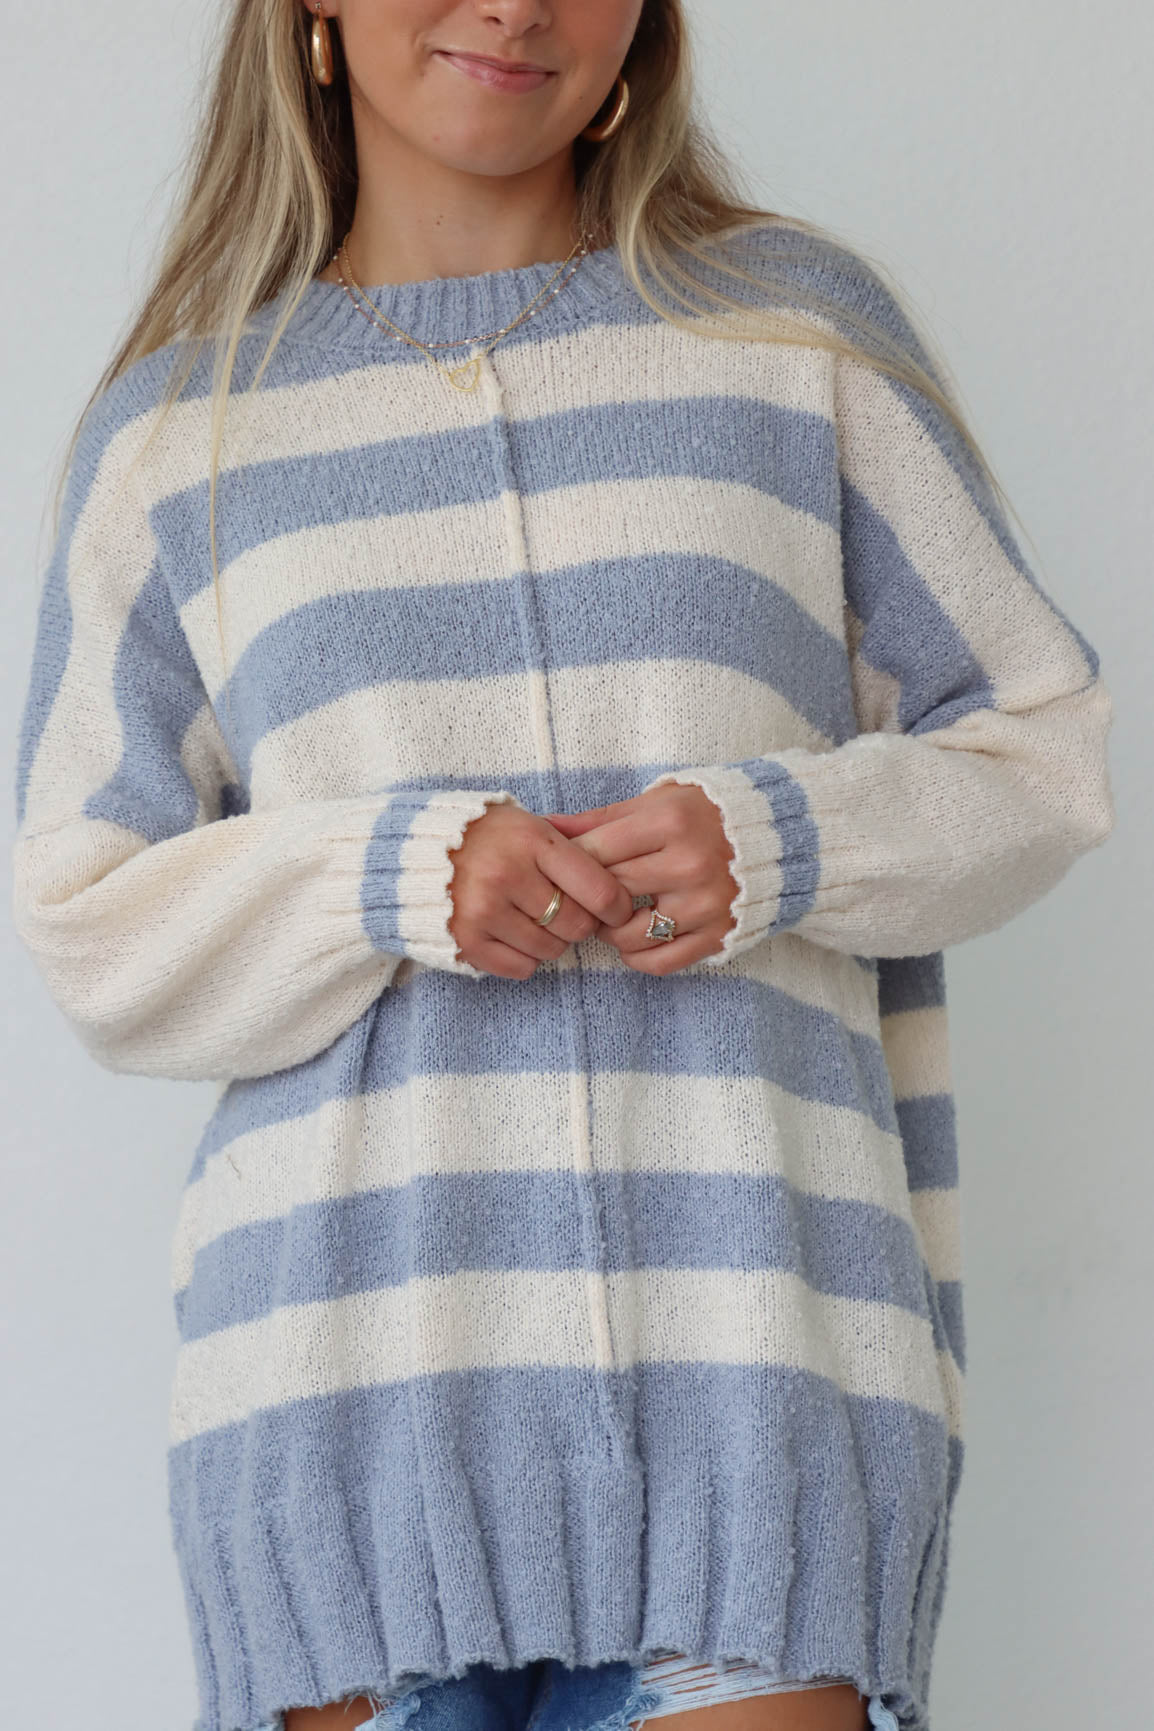 girl wearing blue & cream striped sweater